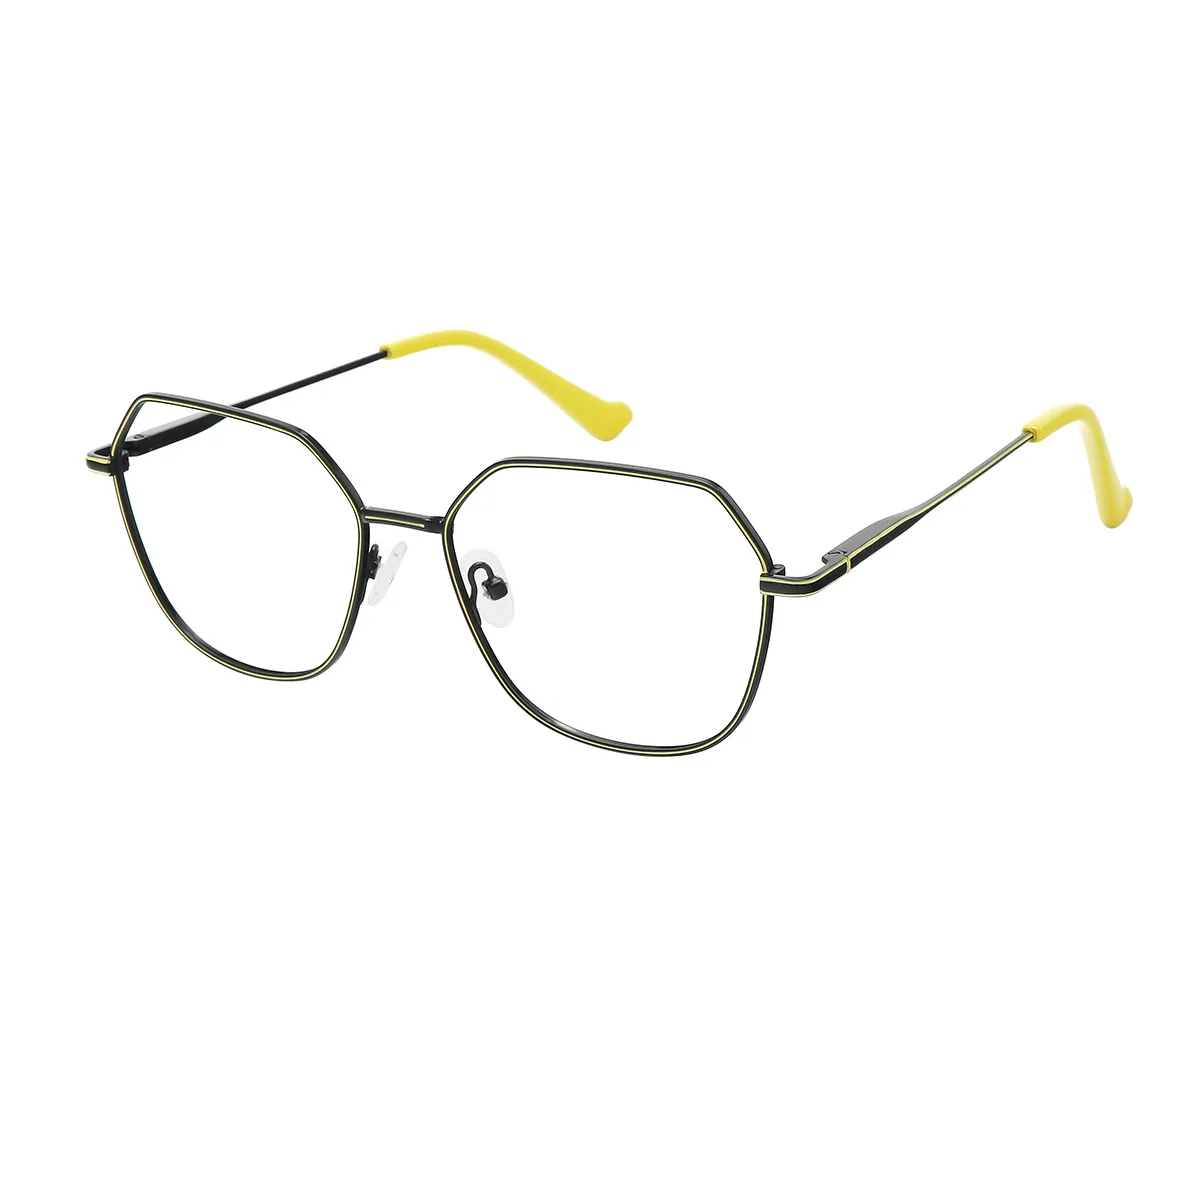 Chai - Geometric Black/Yellow Glasses for Women - EFE